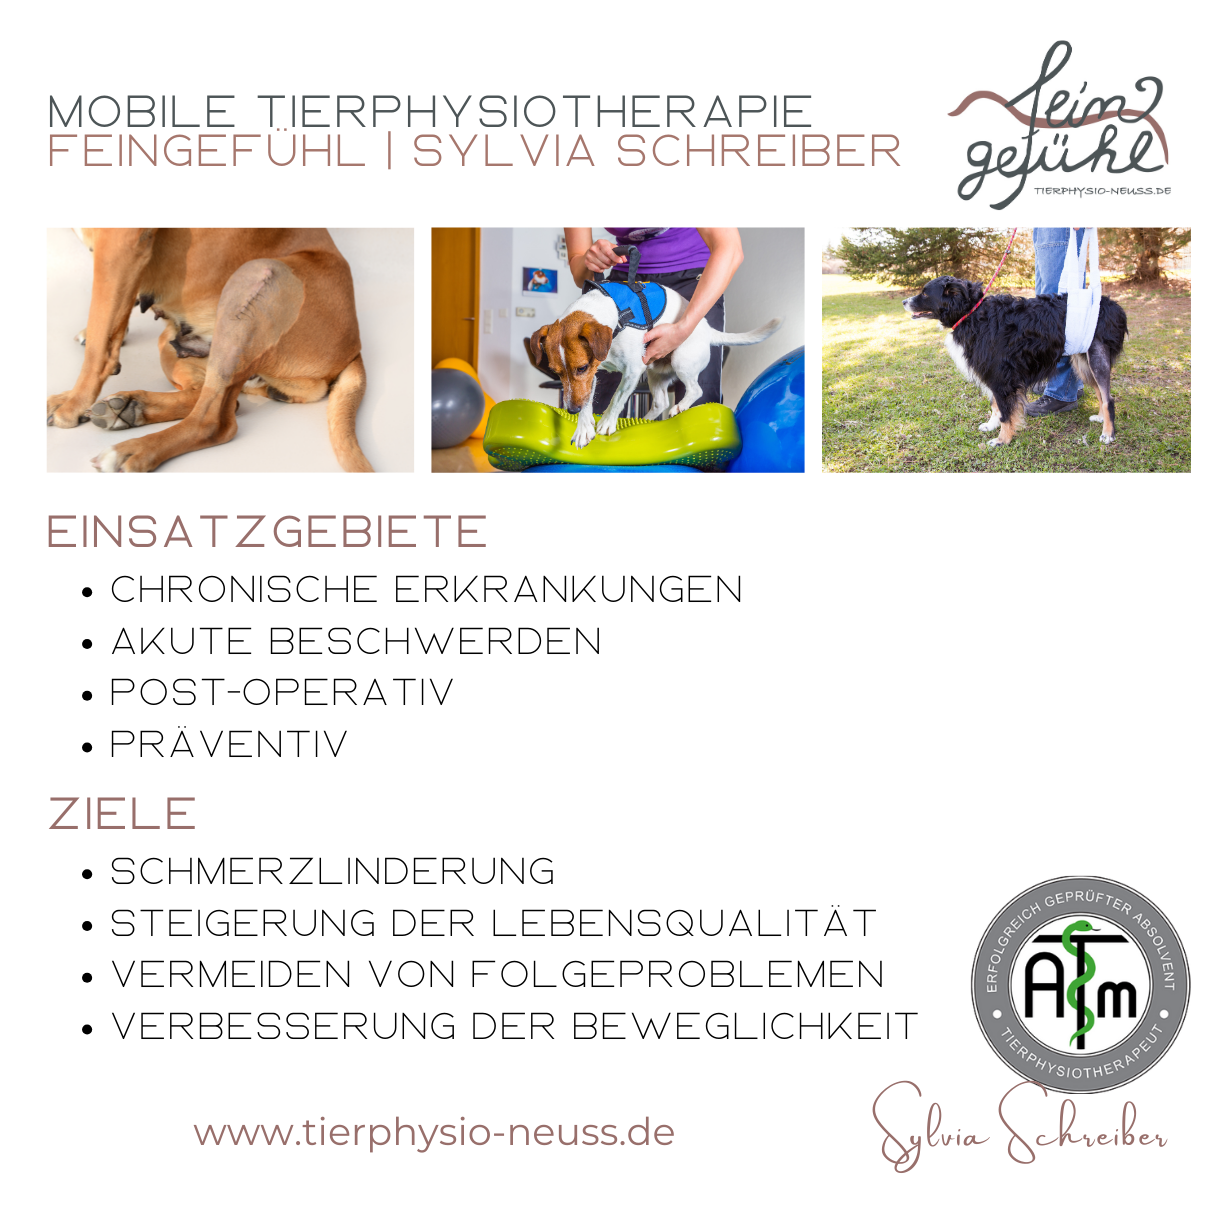 Tierphysiotherapie Feingefühl | mobile Tierphysiotherapie, Michaelstraße 9 in Neuss